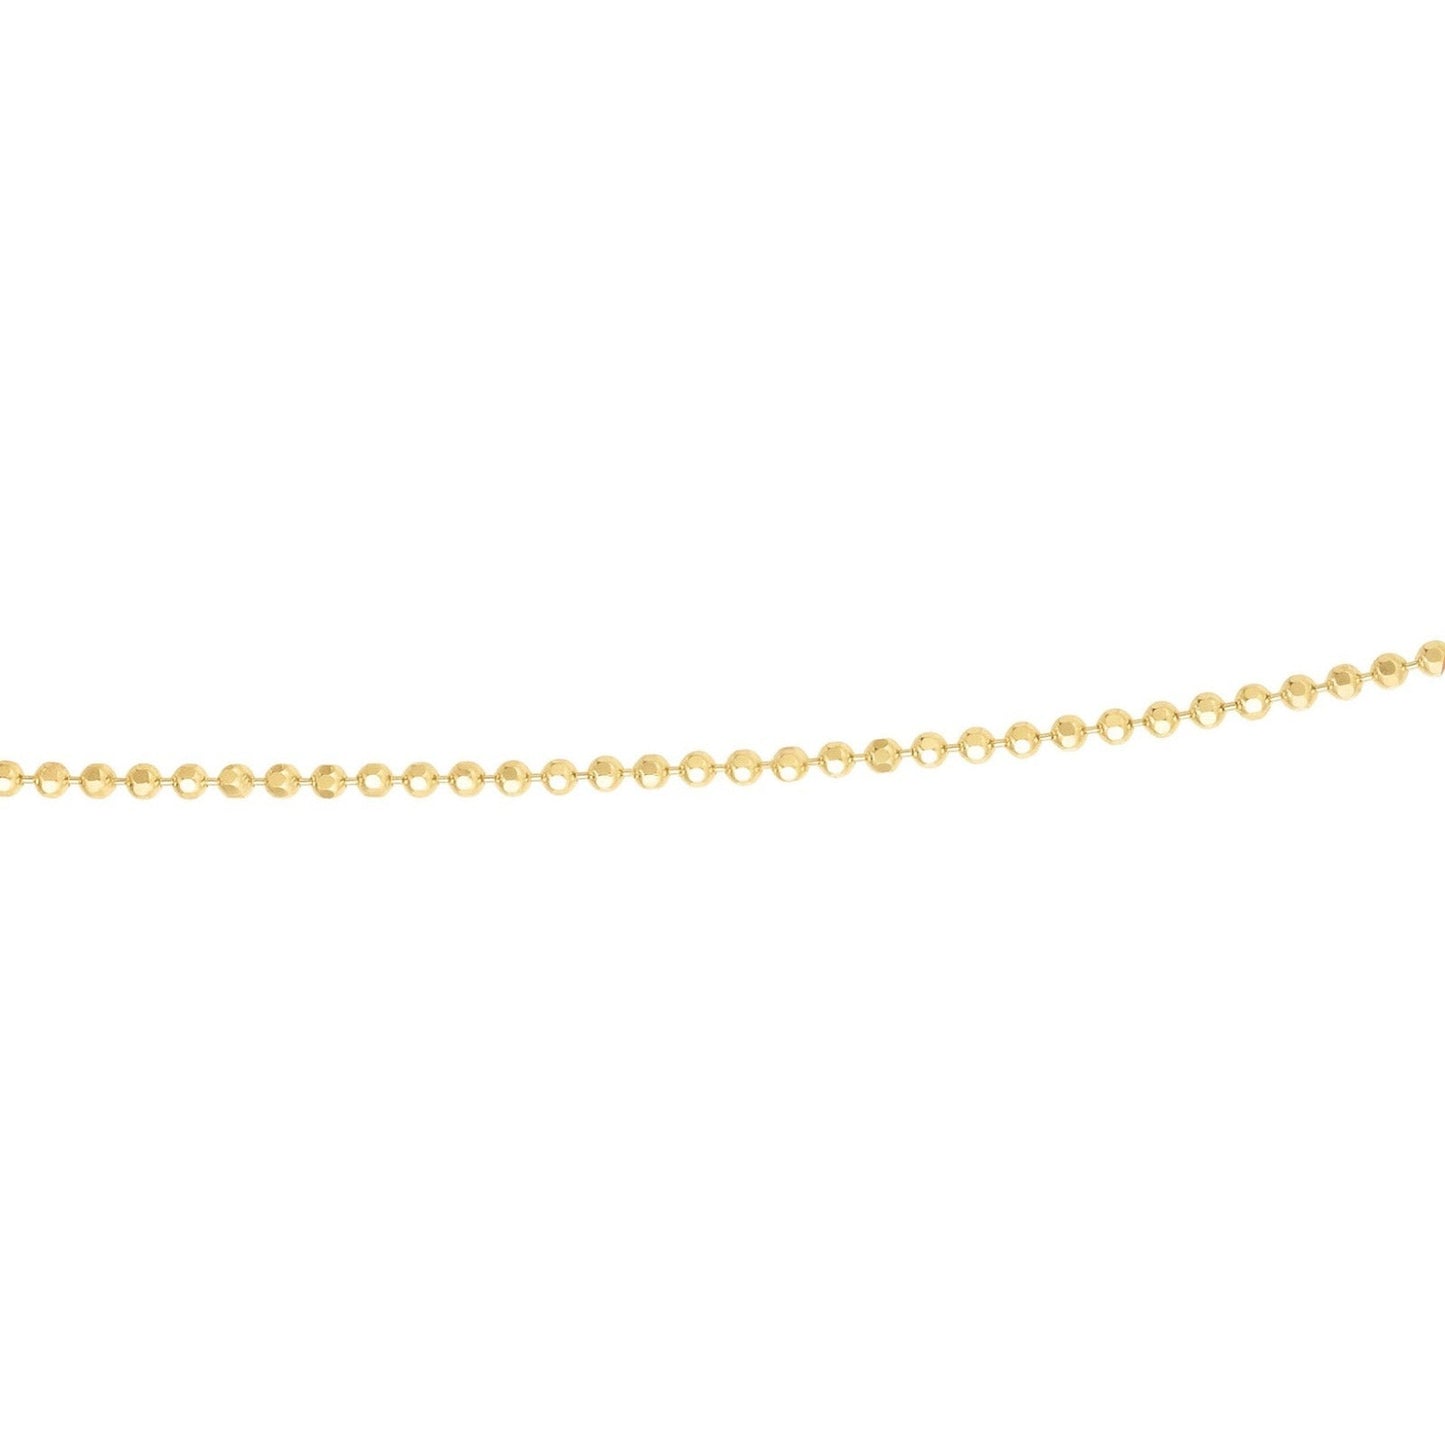 14k gold Diamond Cut Bead Chain Necklace